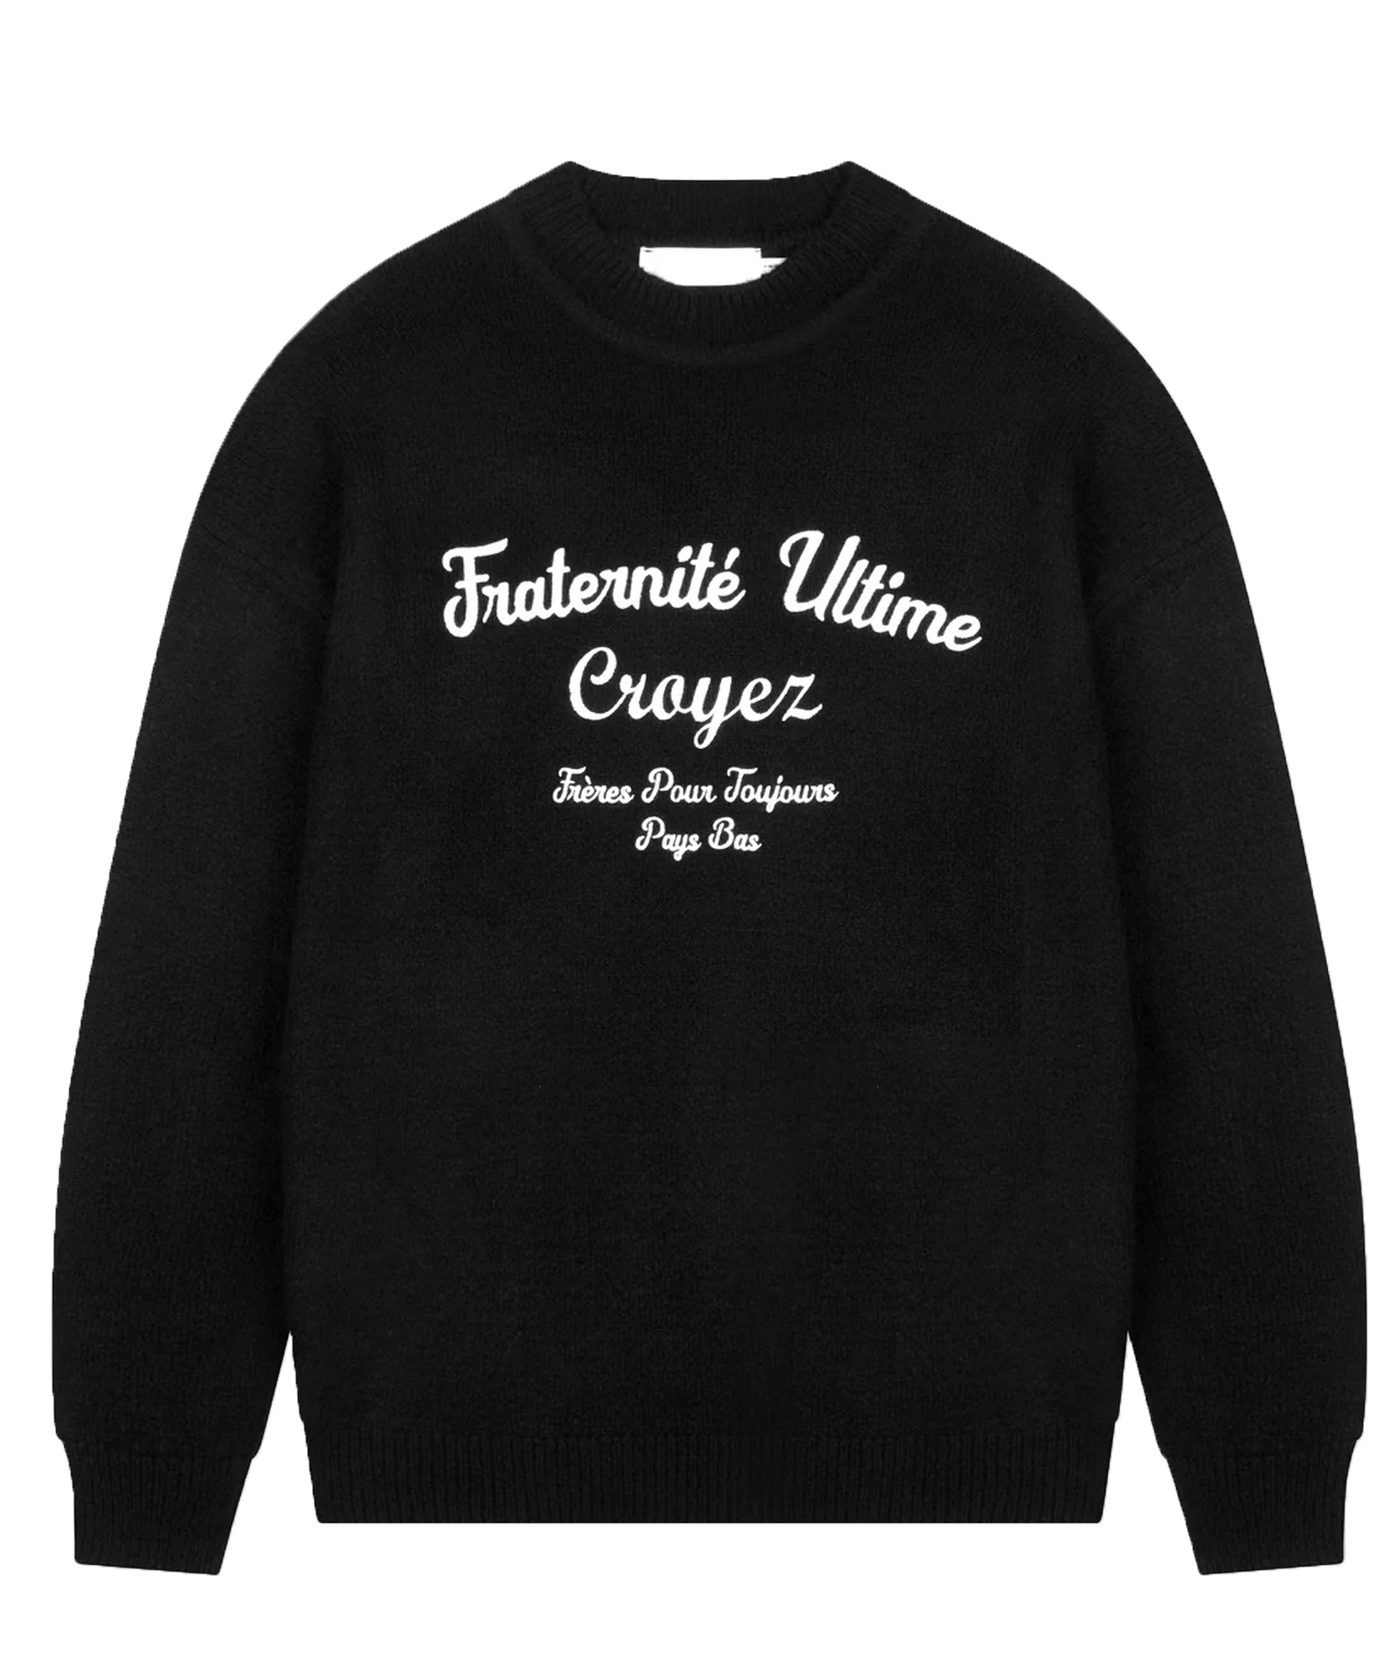 CROYEZ - Fraternite - Knit Sweater - Black